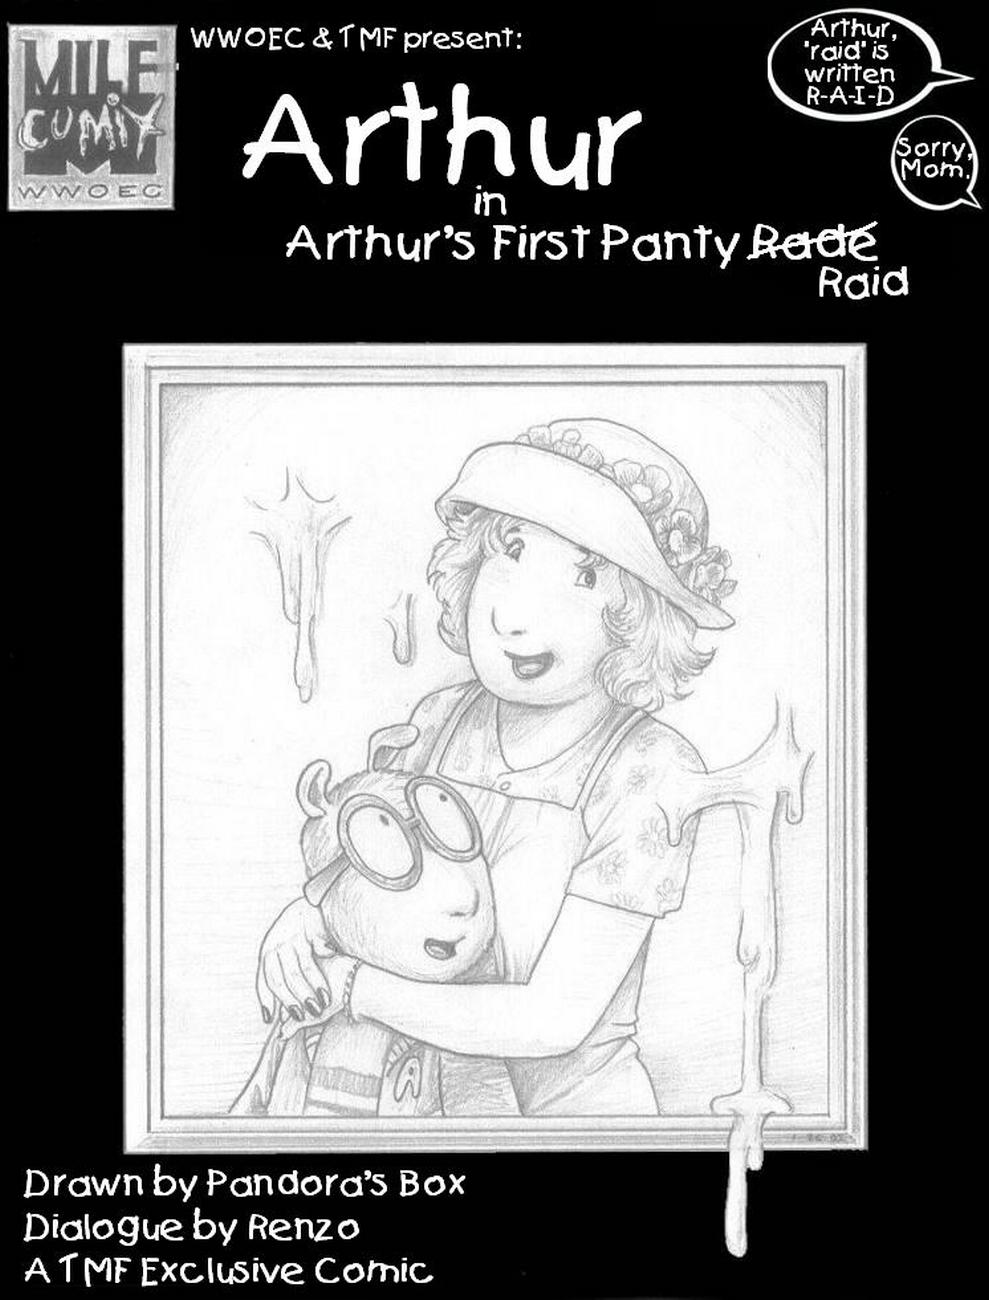 Arthur's First Panty Raid